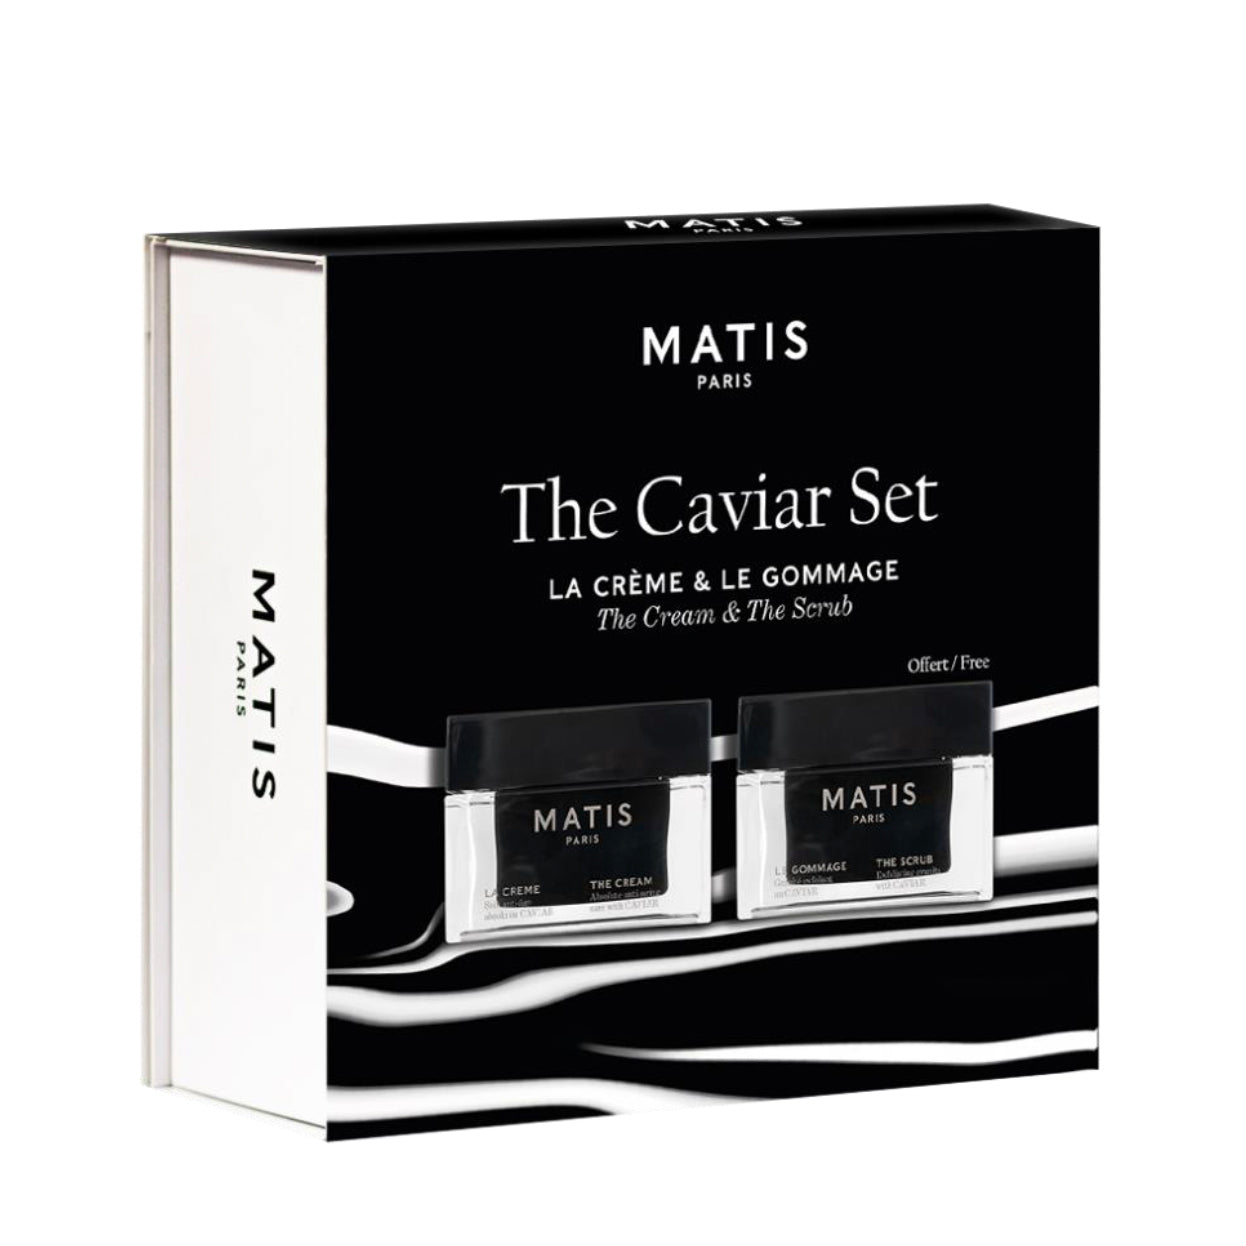 Matis Caviar Day Set (The Cream & The Scrub)